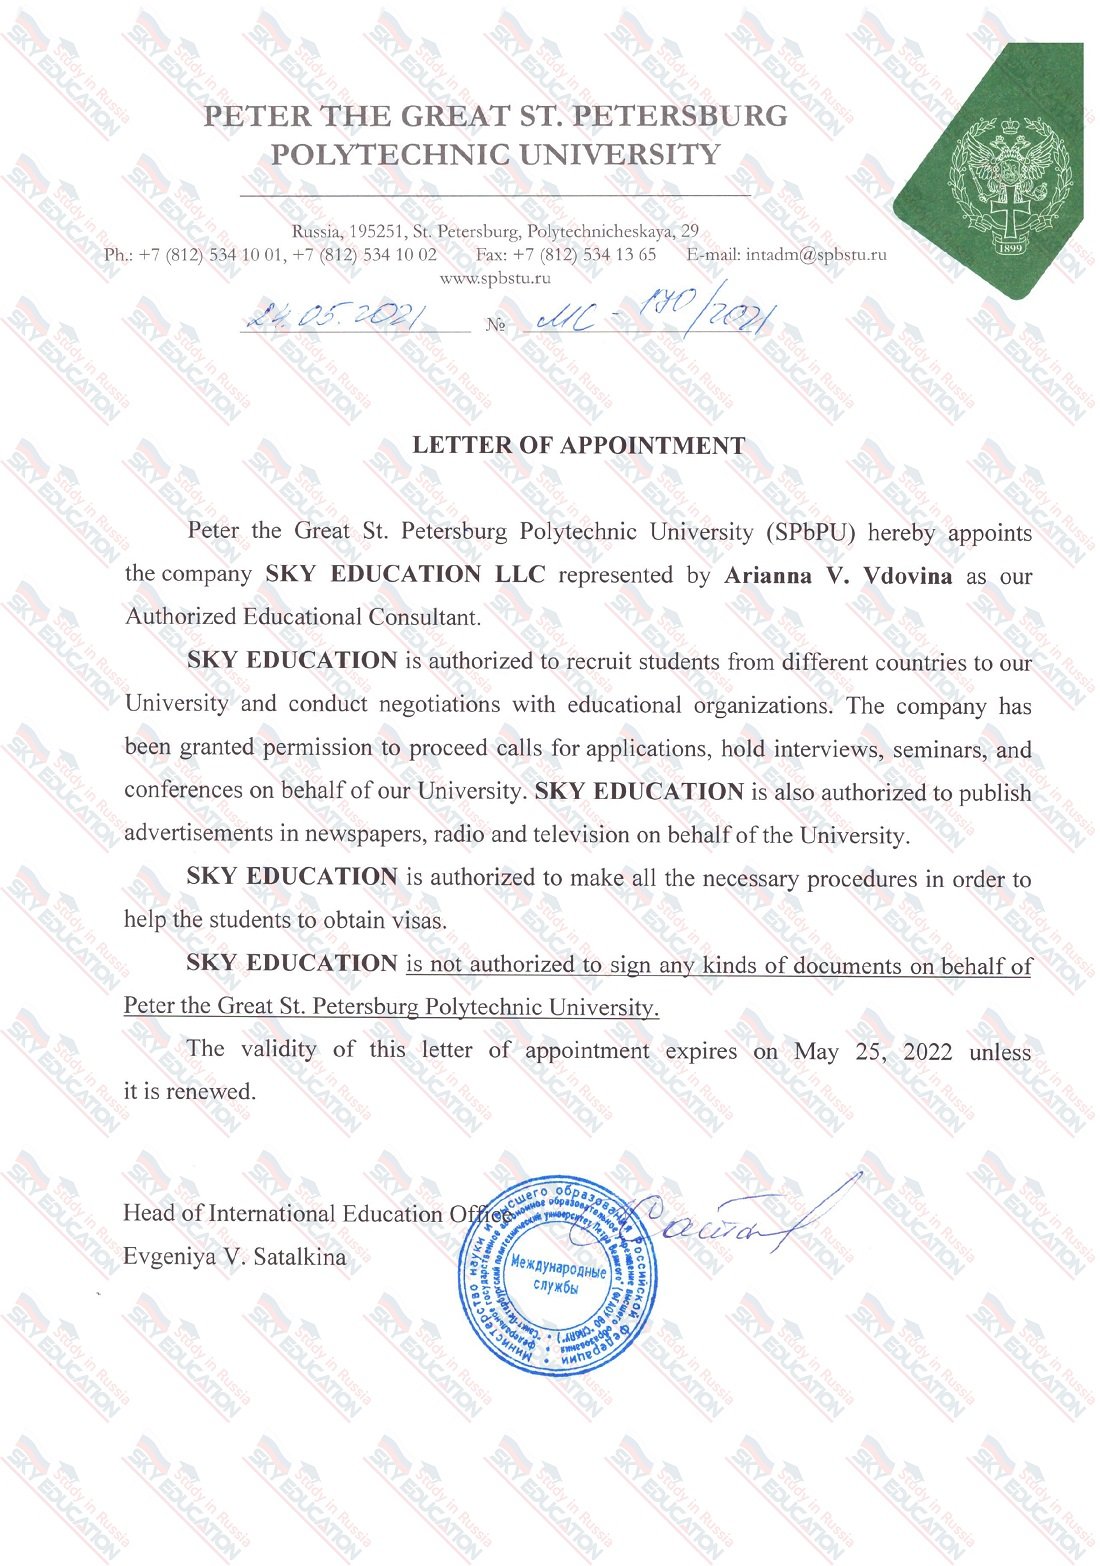 Sky Education Official Representative Certificate of St. Petersburg Polytechnic University